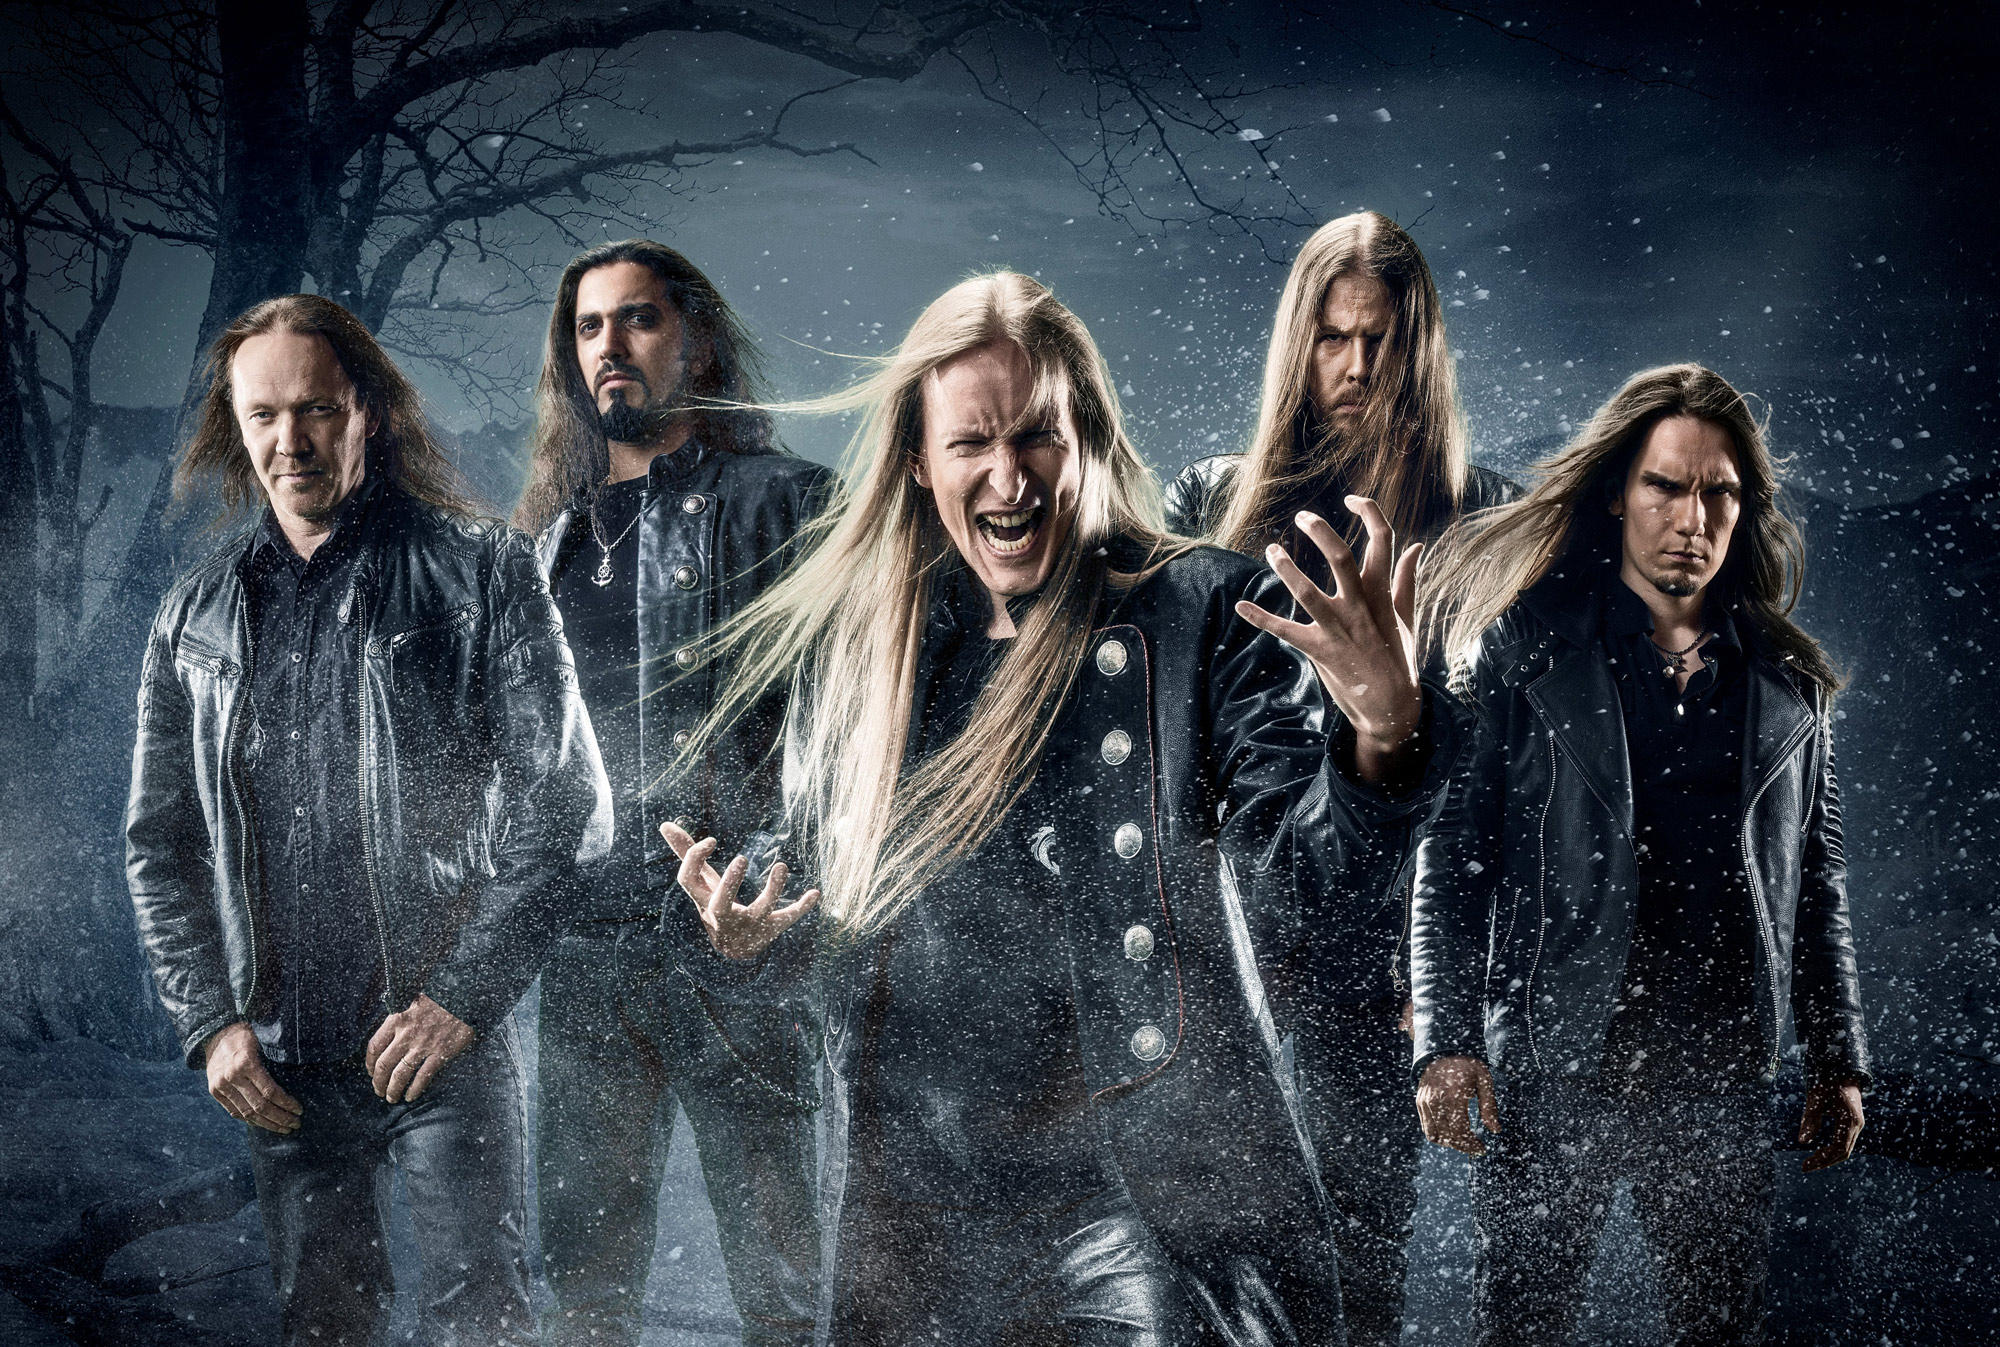 Video Interview: Metal Insider’s M.I Crowley speaks to Jukka and Asim of Wintersun